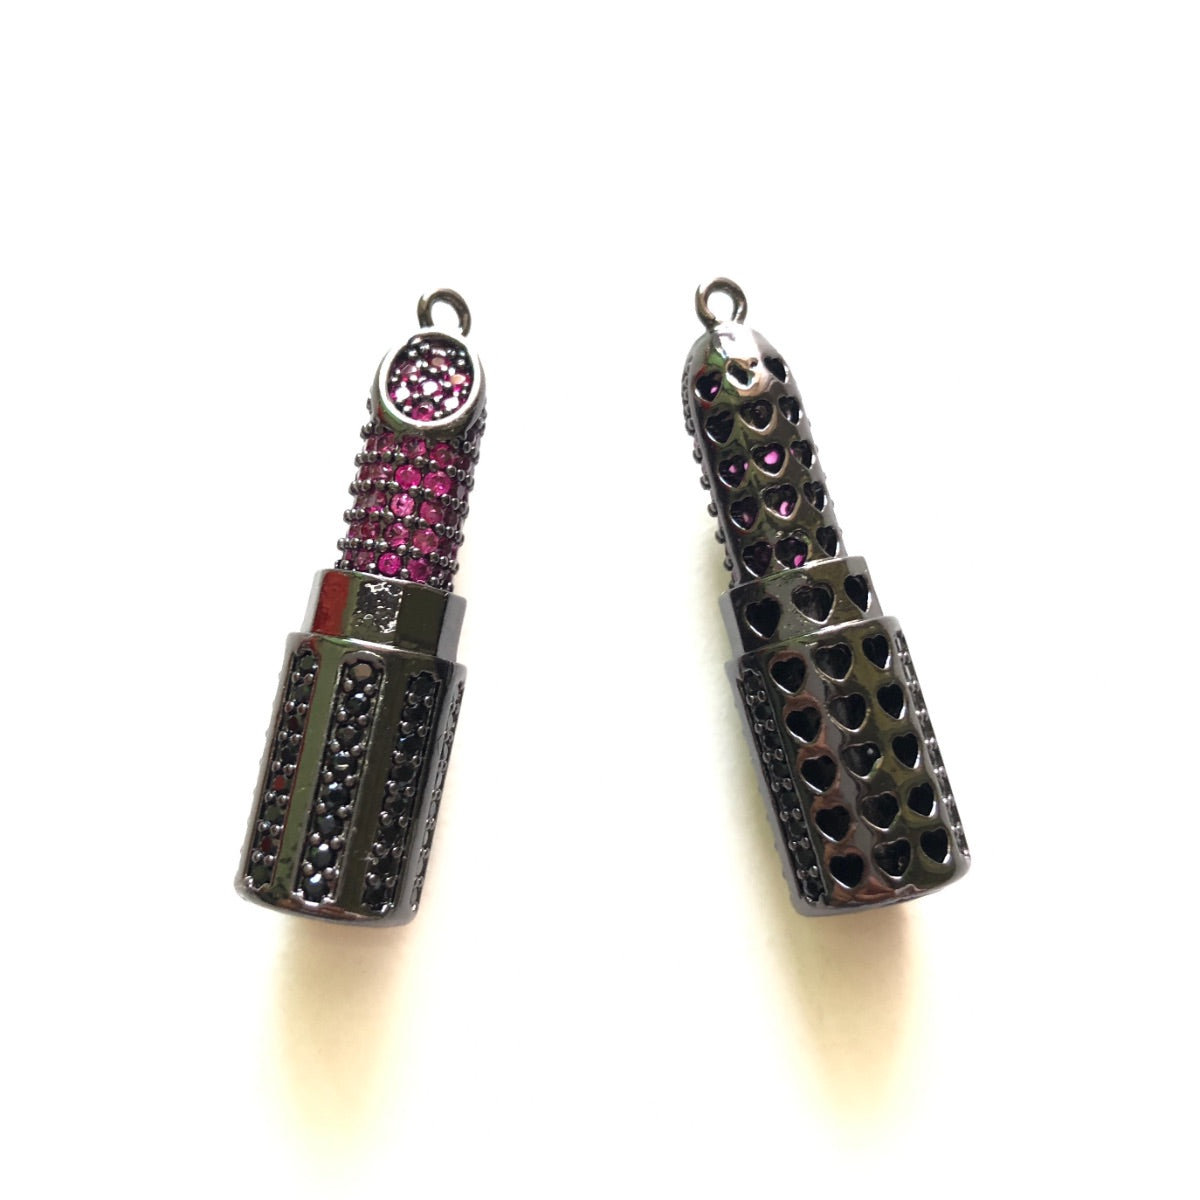 10pcs/lot 35*10mm CZ Paved Lipstick Charms Black on Black CZ Paved Charms Fashion On Sale Charms Beads Beyond